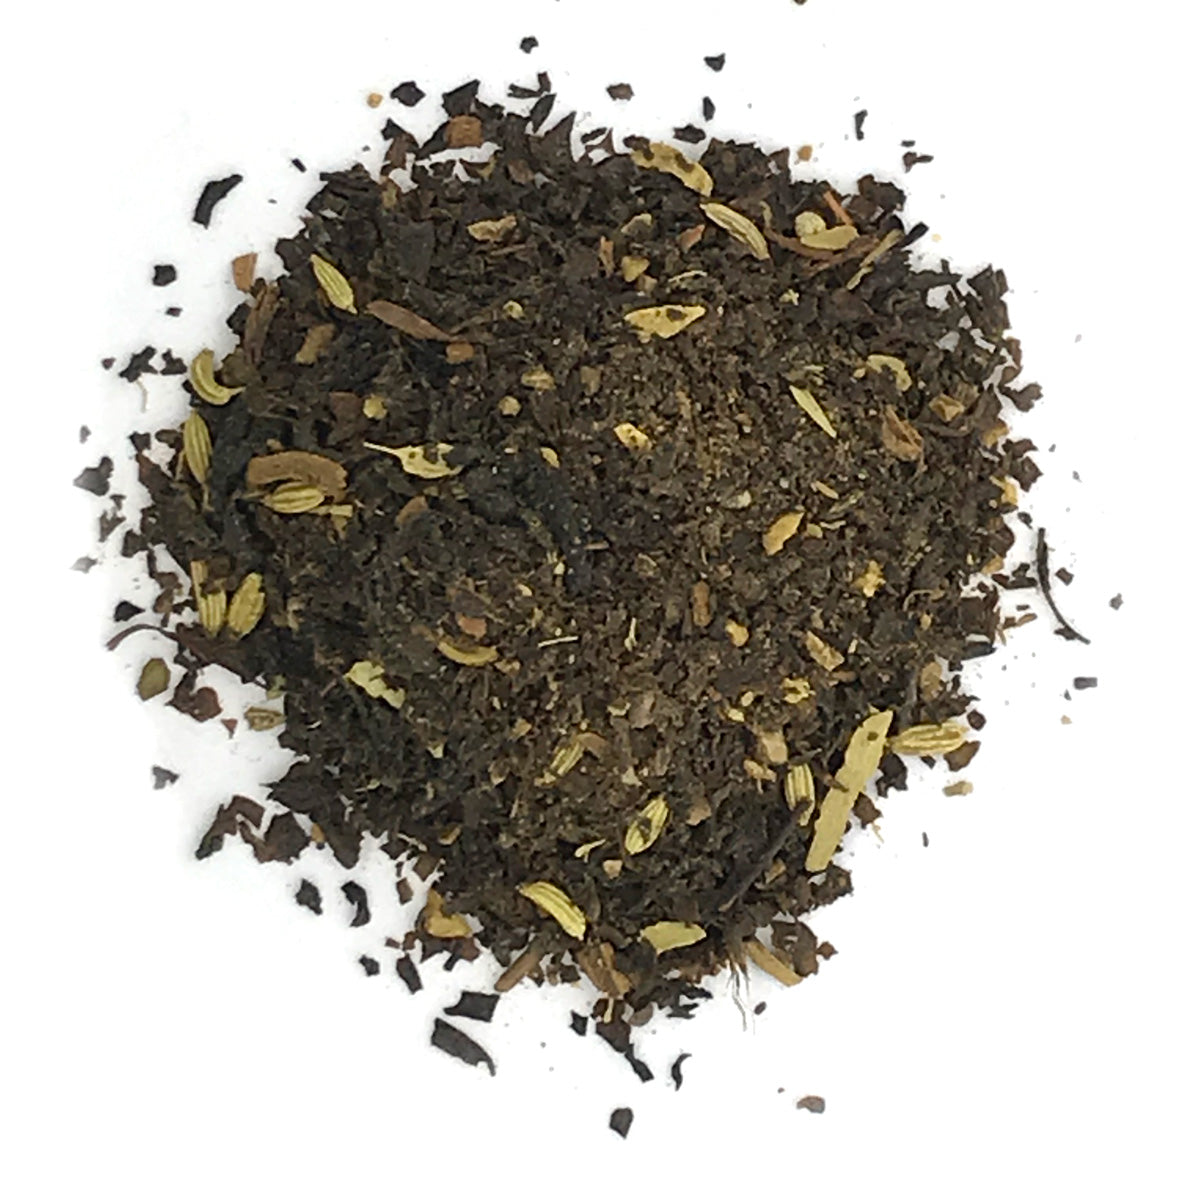 Byron Chai Indian Spiced Tea Loose Leaf 100g, 200g Or 500g